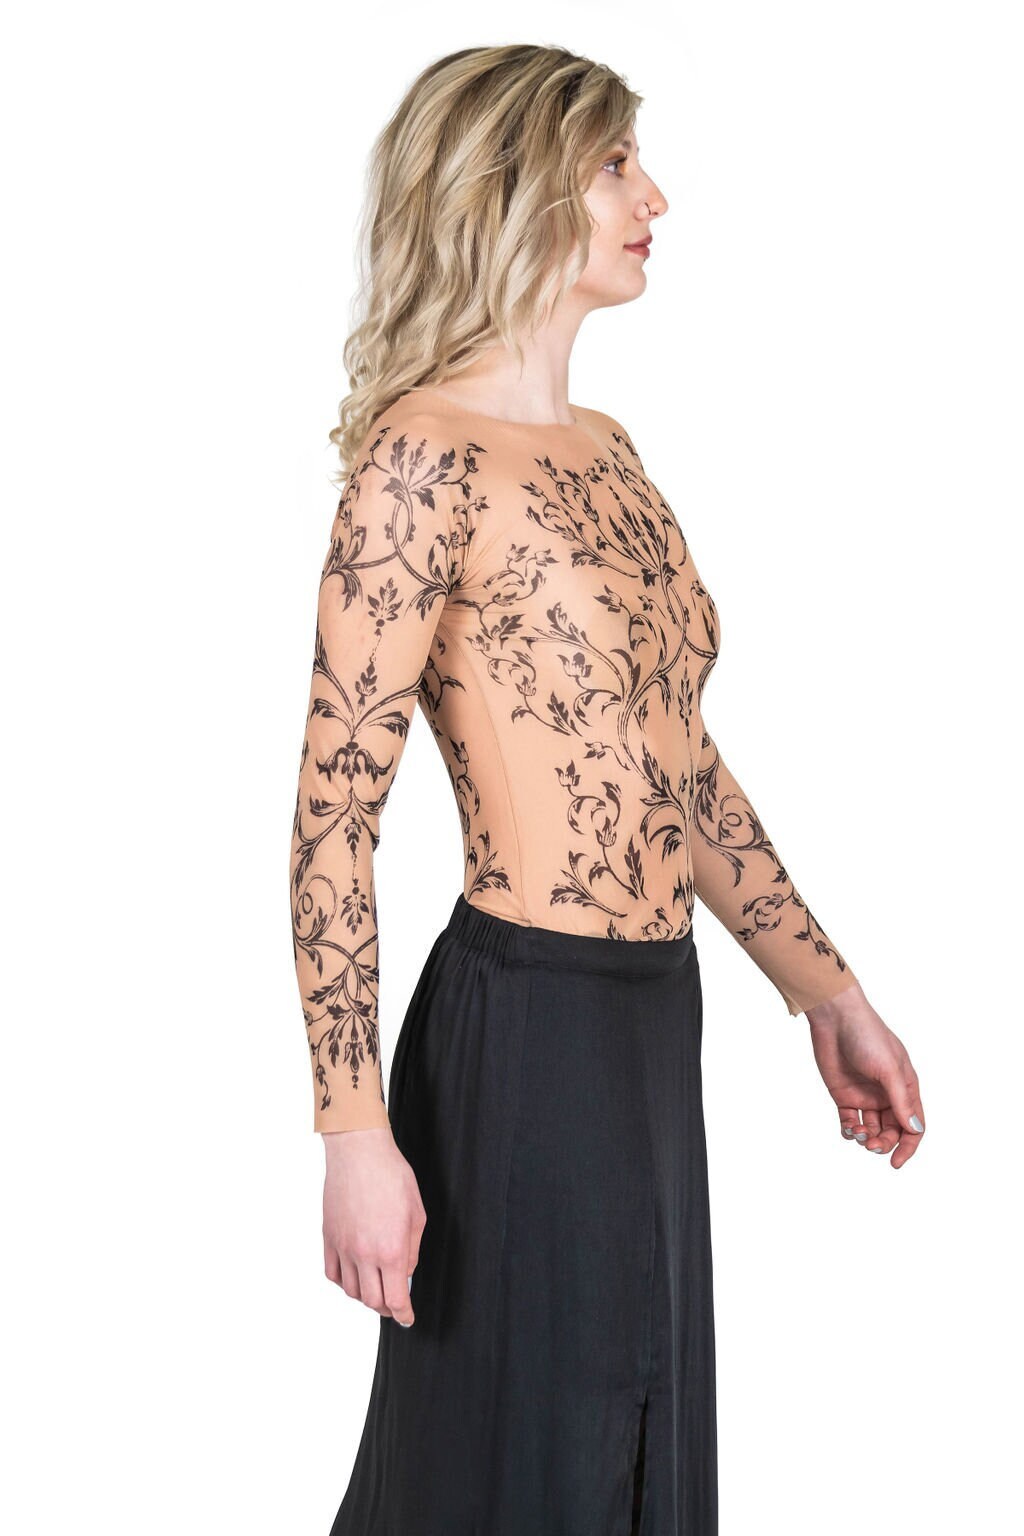 Filigree Fleur-de-Lis Lacework Mesh Tattoo Shirt